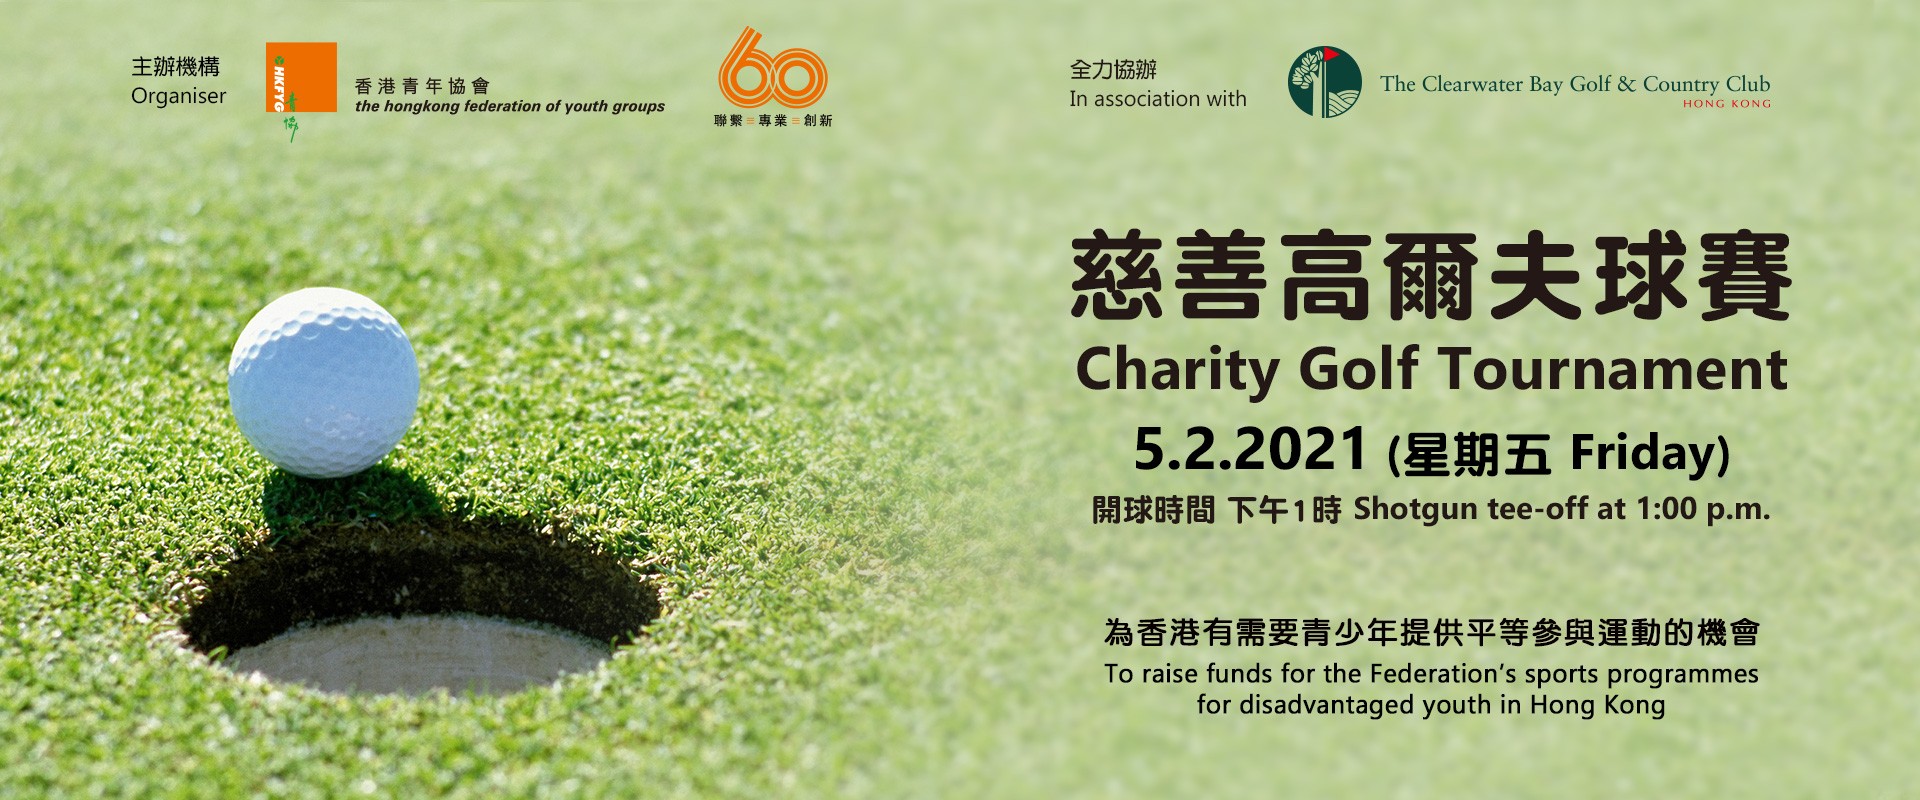 golf2020-web-banner